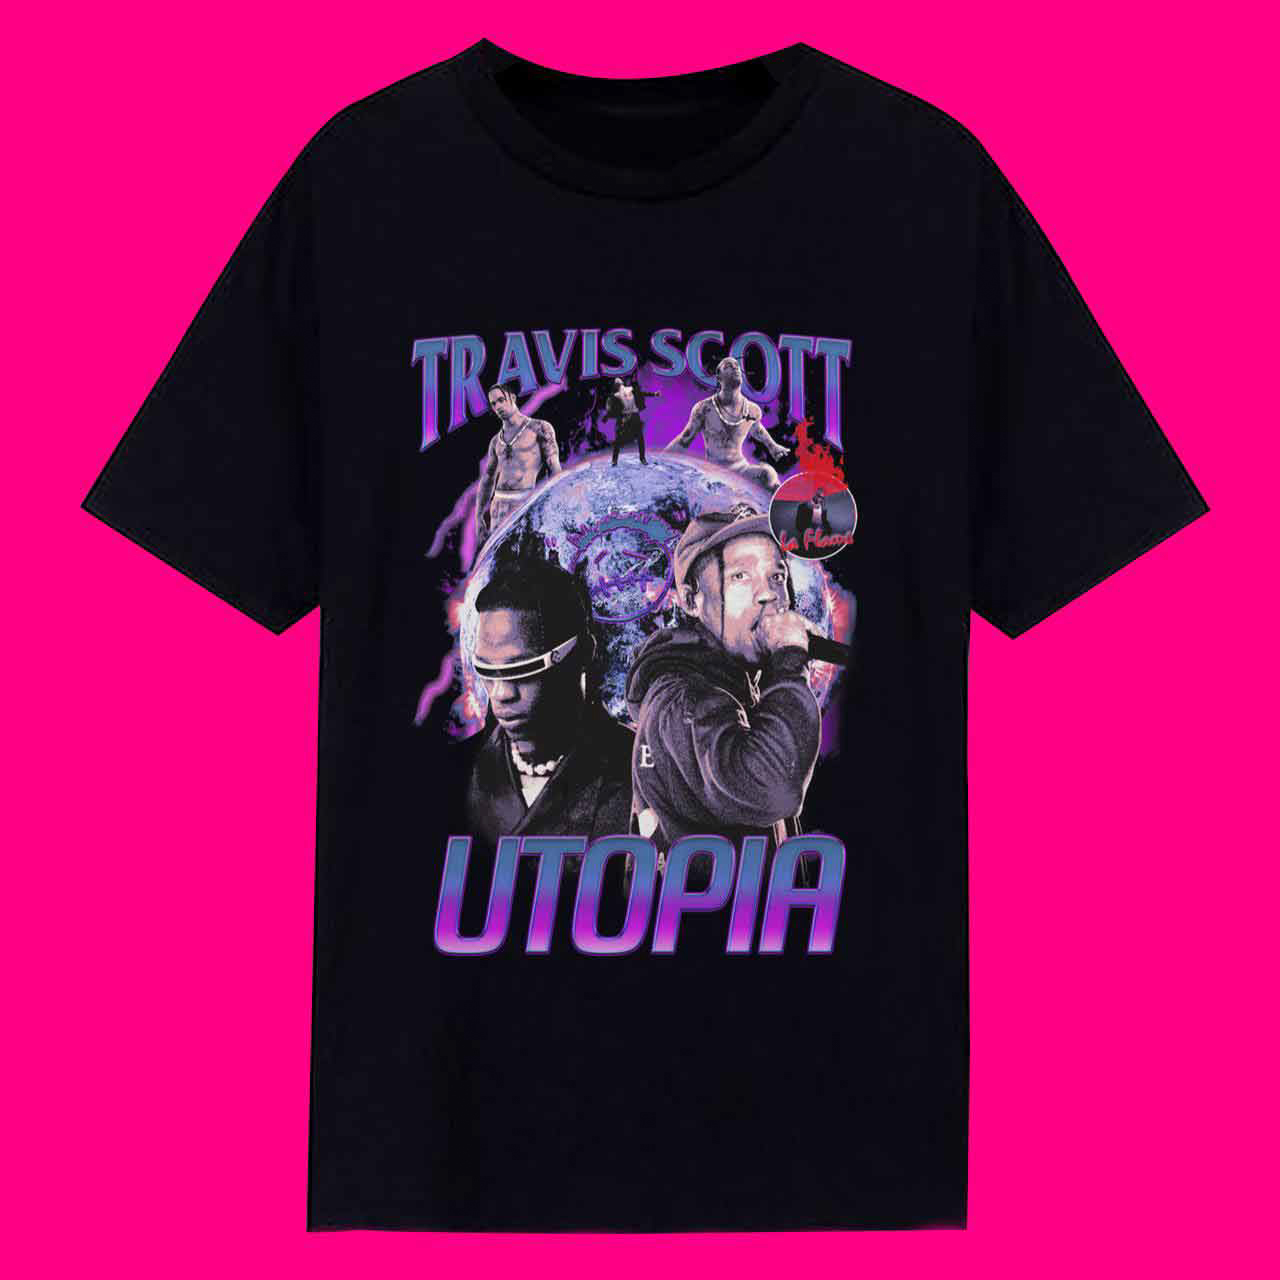 Vintage La Flame Travis Scott Utopia Tee Shirt